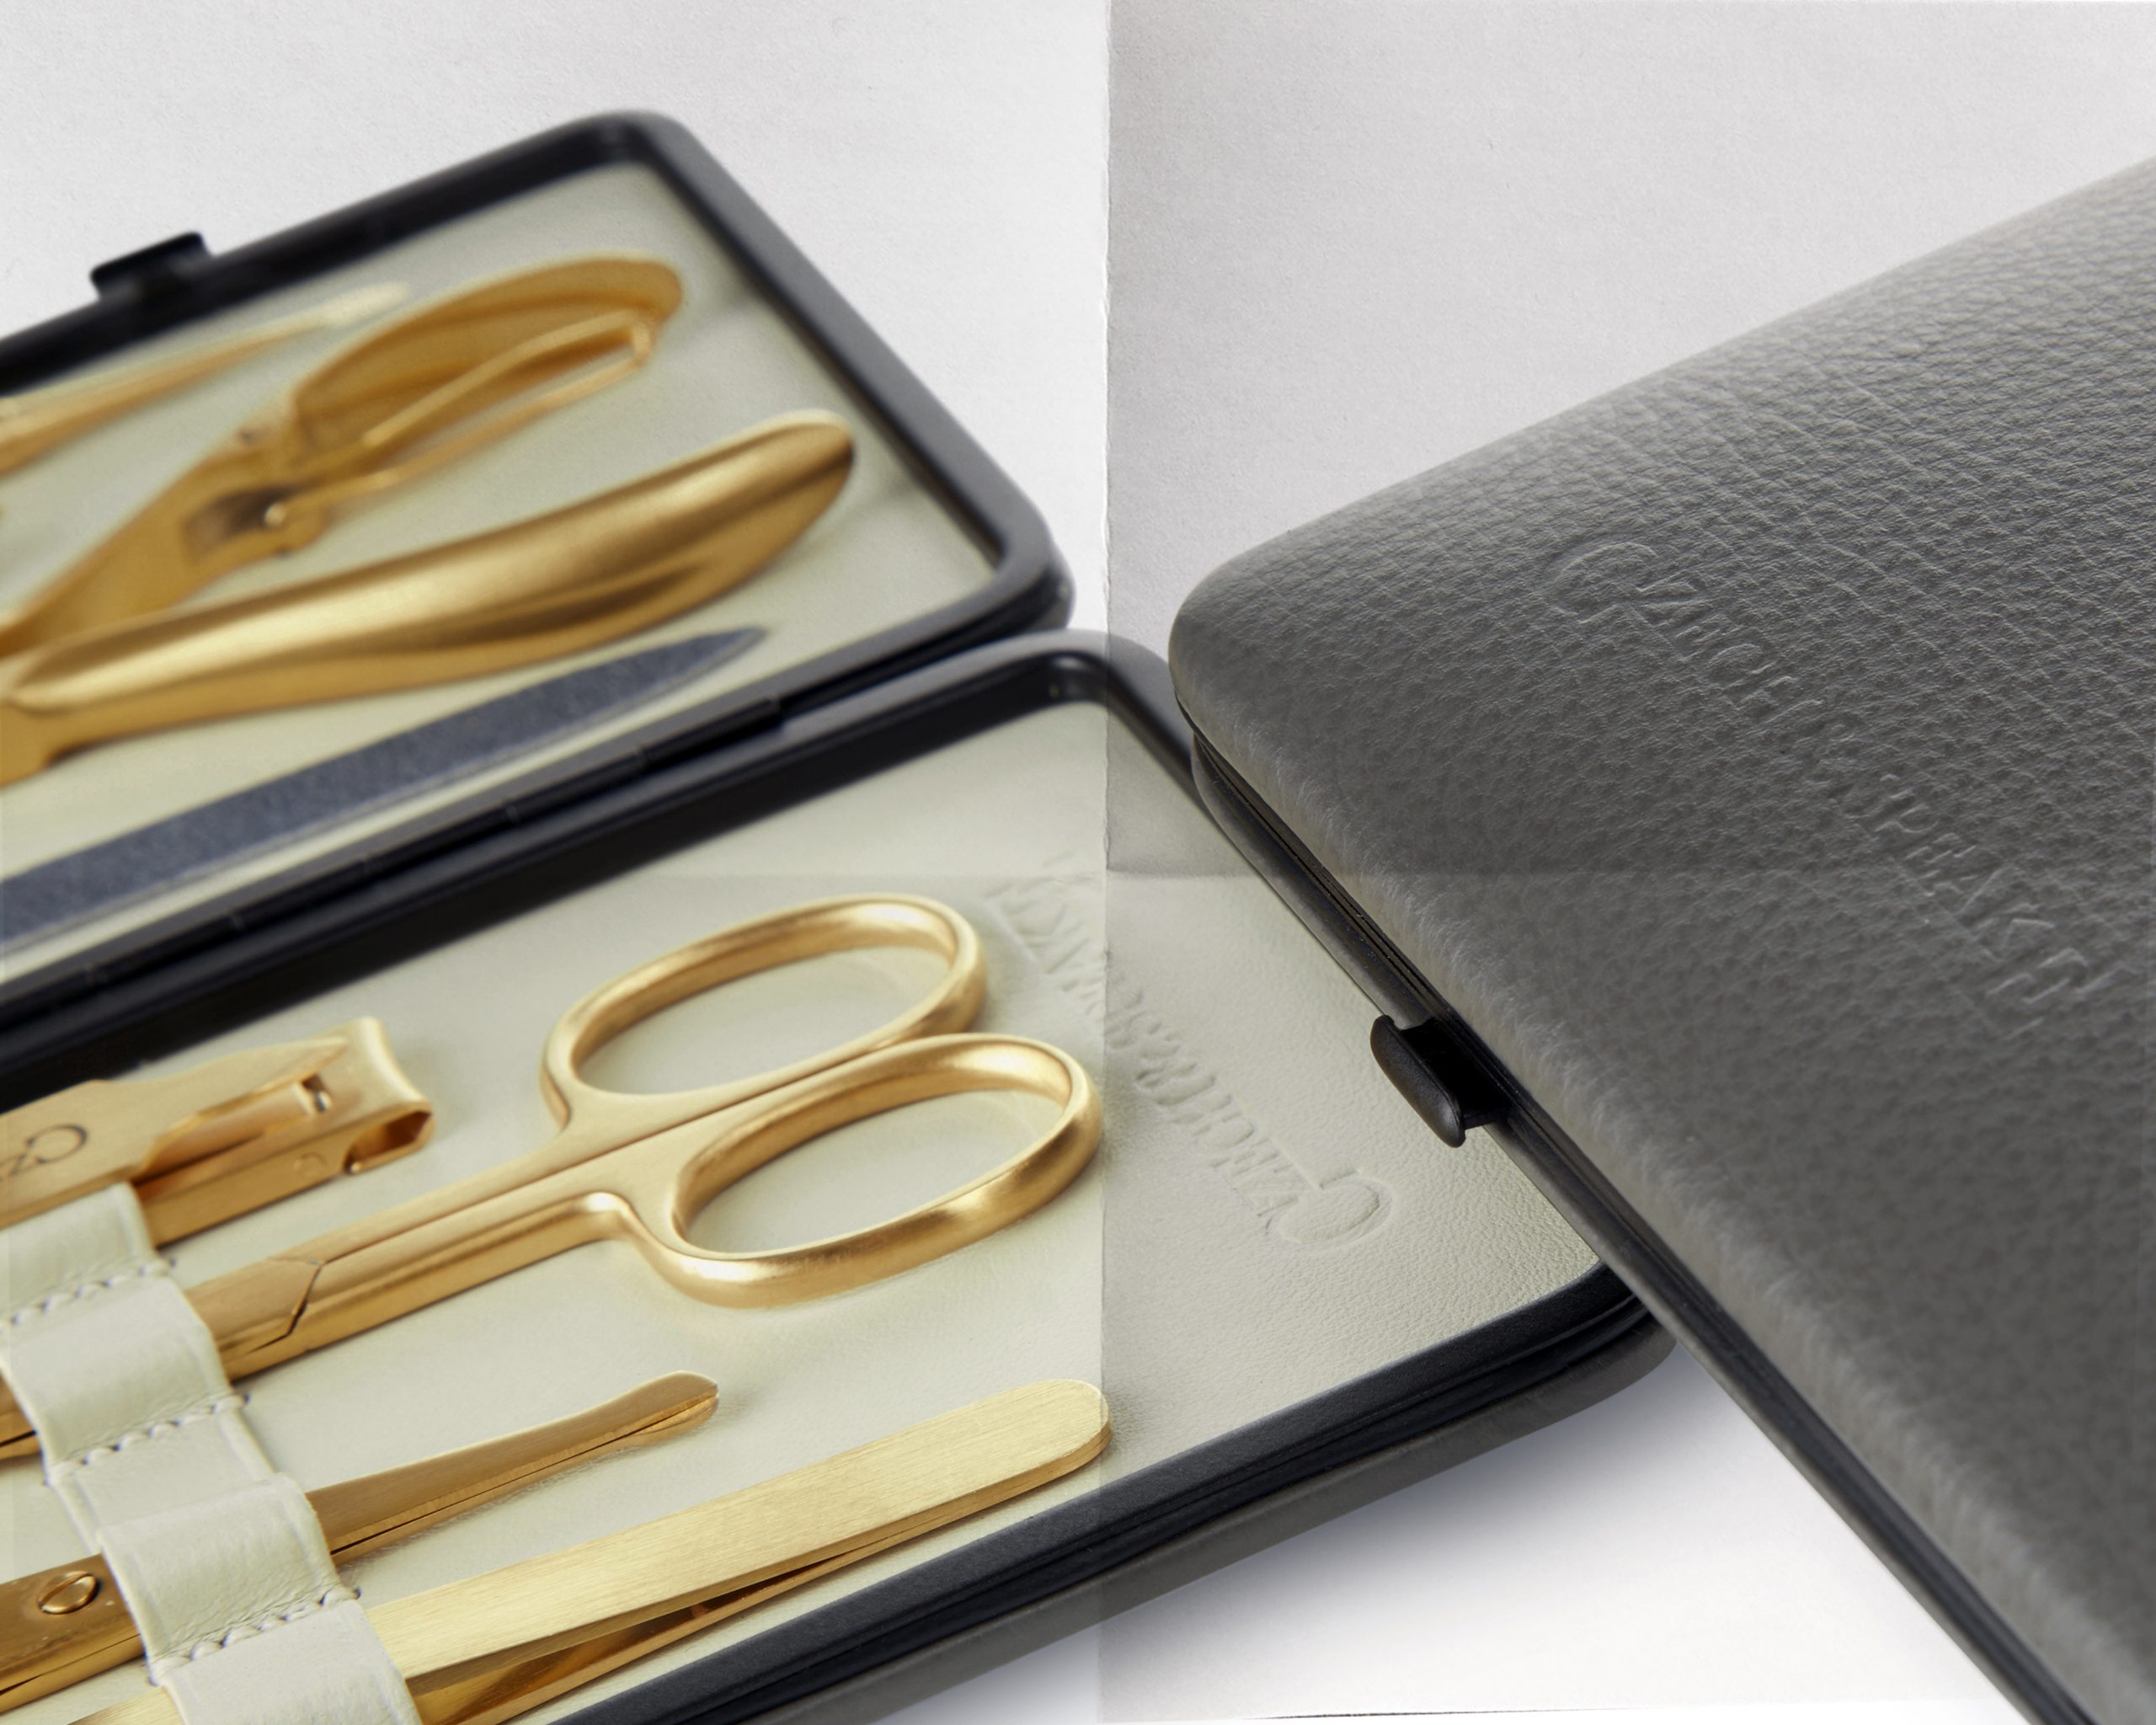 Czech & Speake Manicure Set 8-piece gold instruments grey leather case